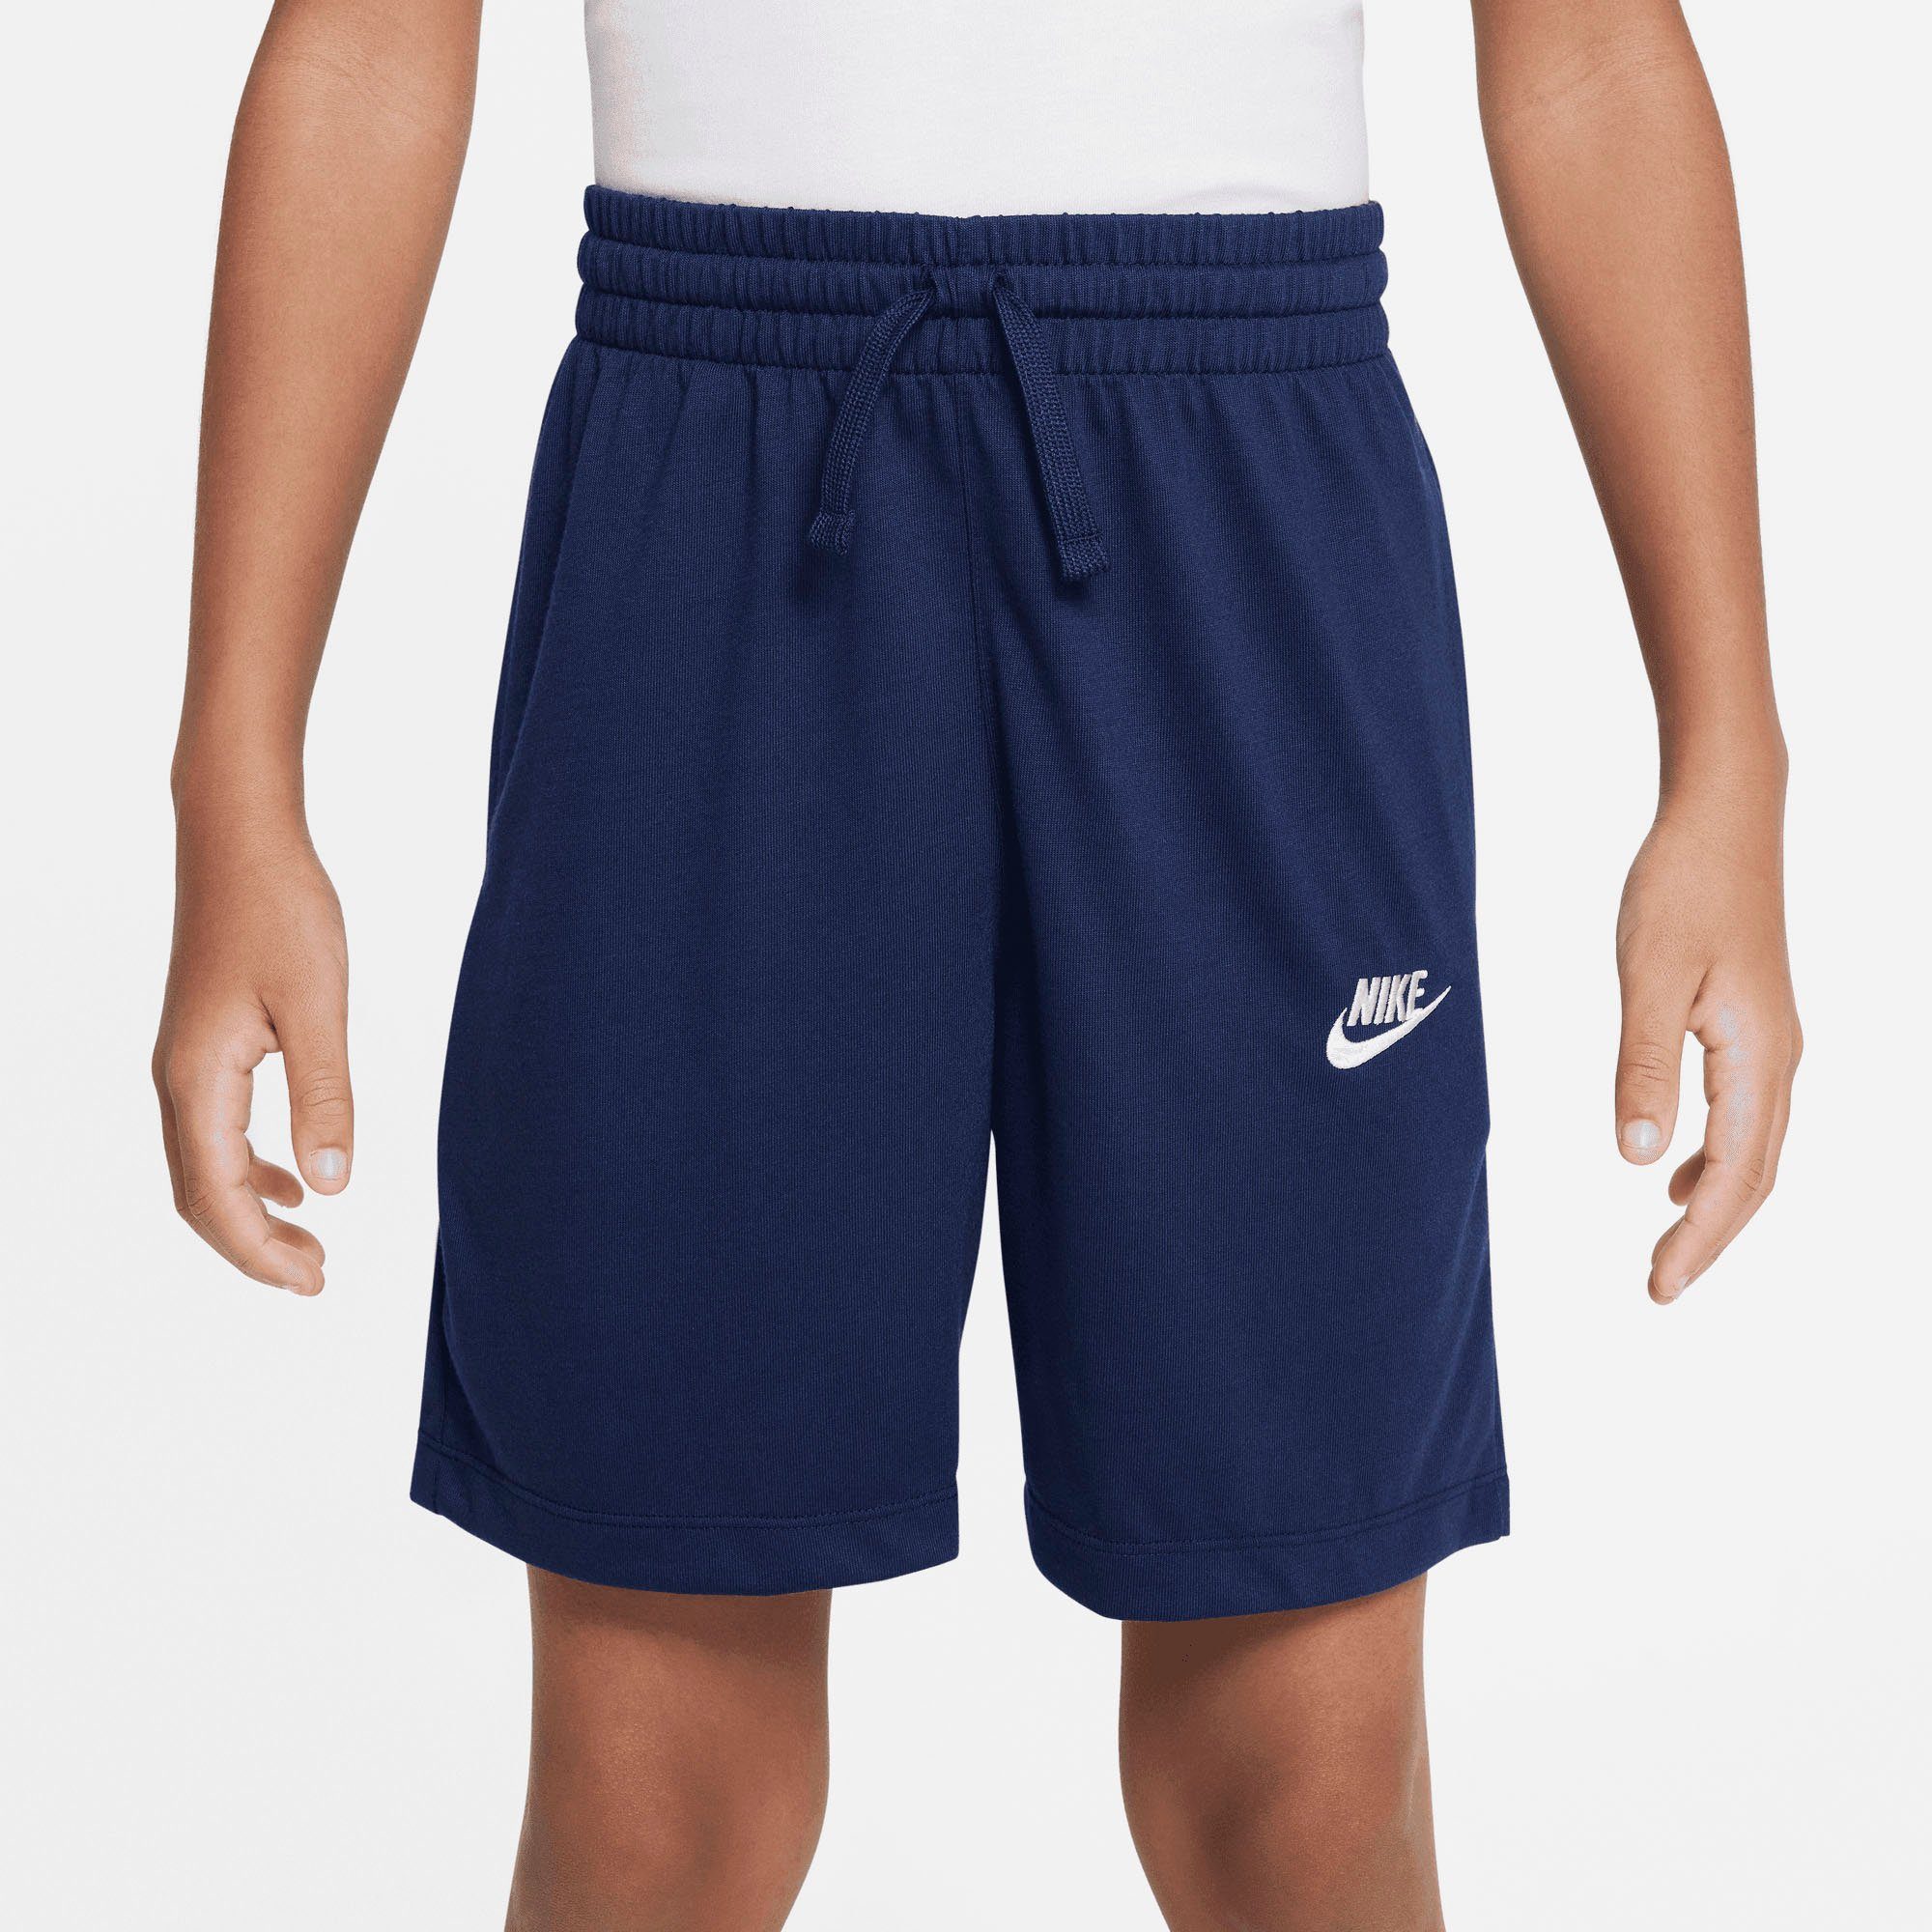 Shorts KIDS' (BOYS) Nike Sportswear BIG JERSEY blau SHORTS